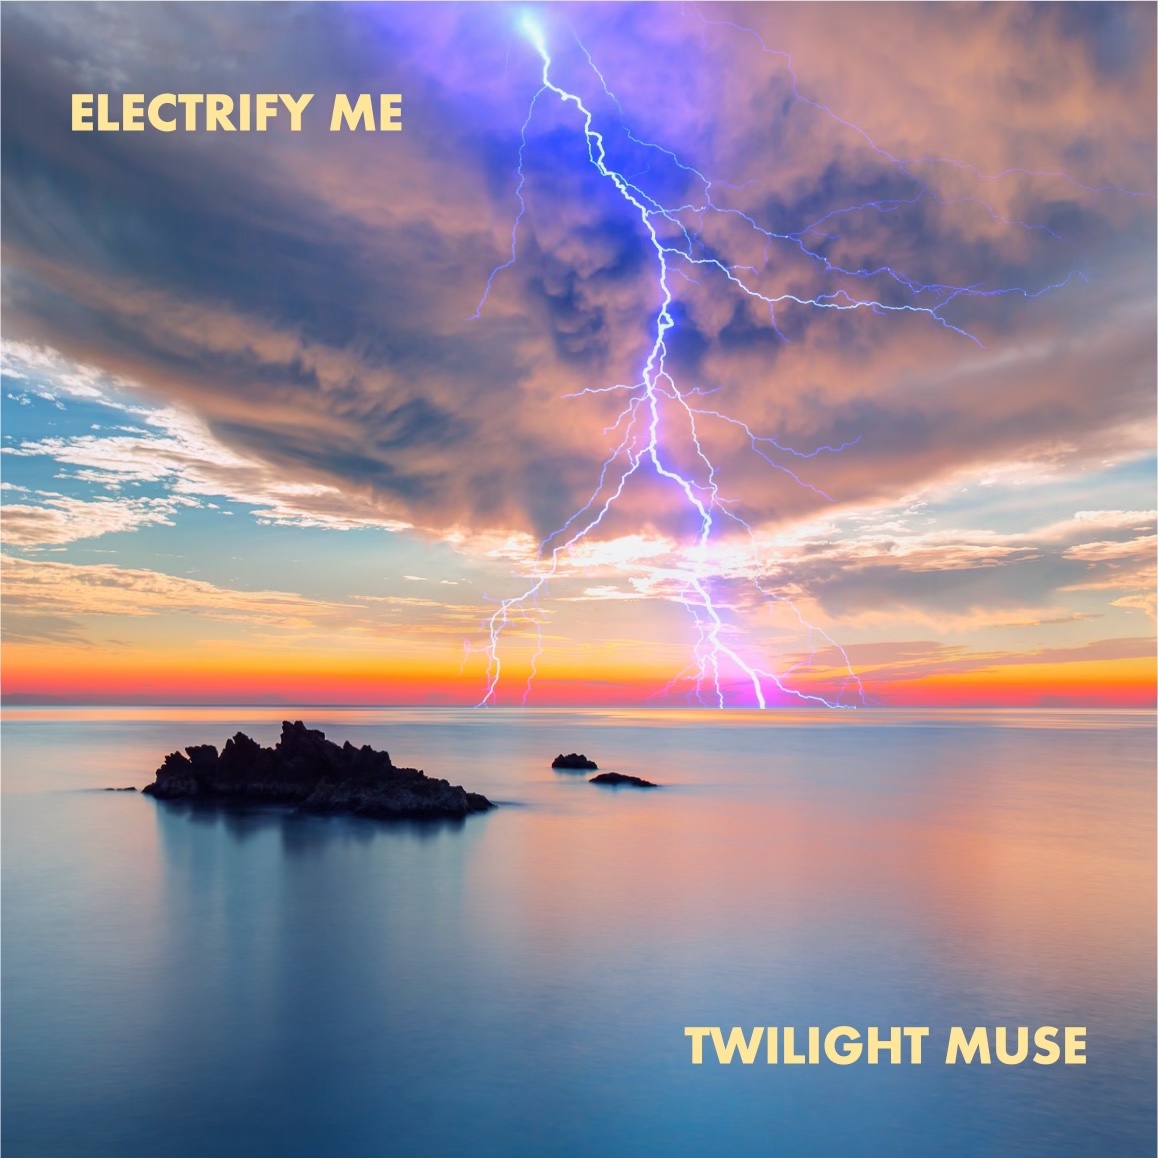 Twilight Muse ‘Electrify Me’ single artwork